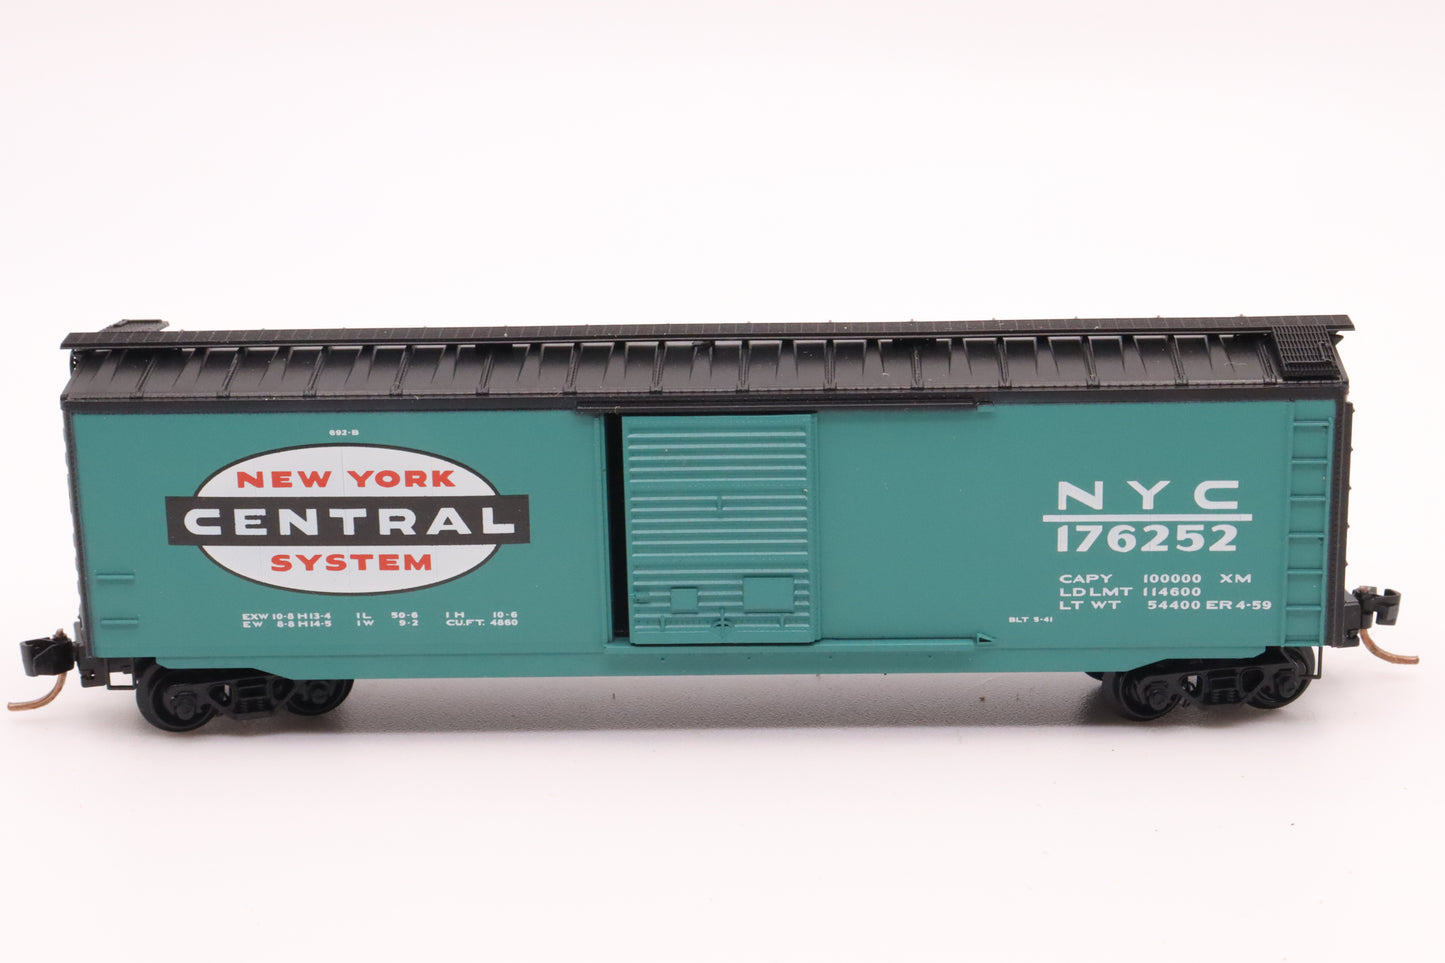 MTL-31190 - 50' Standard Boxcar, Single Door - New York Central - NYC #176252